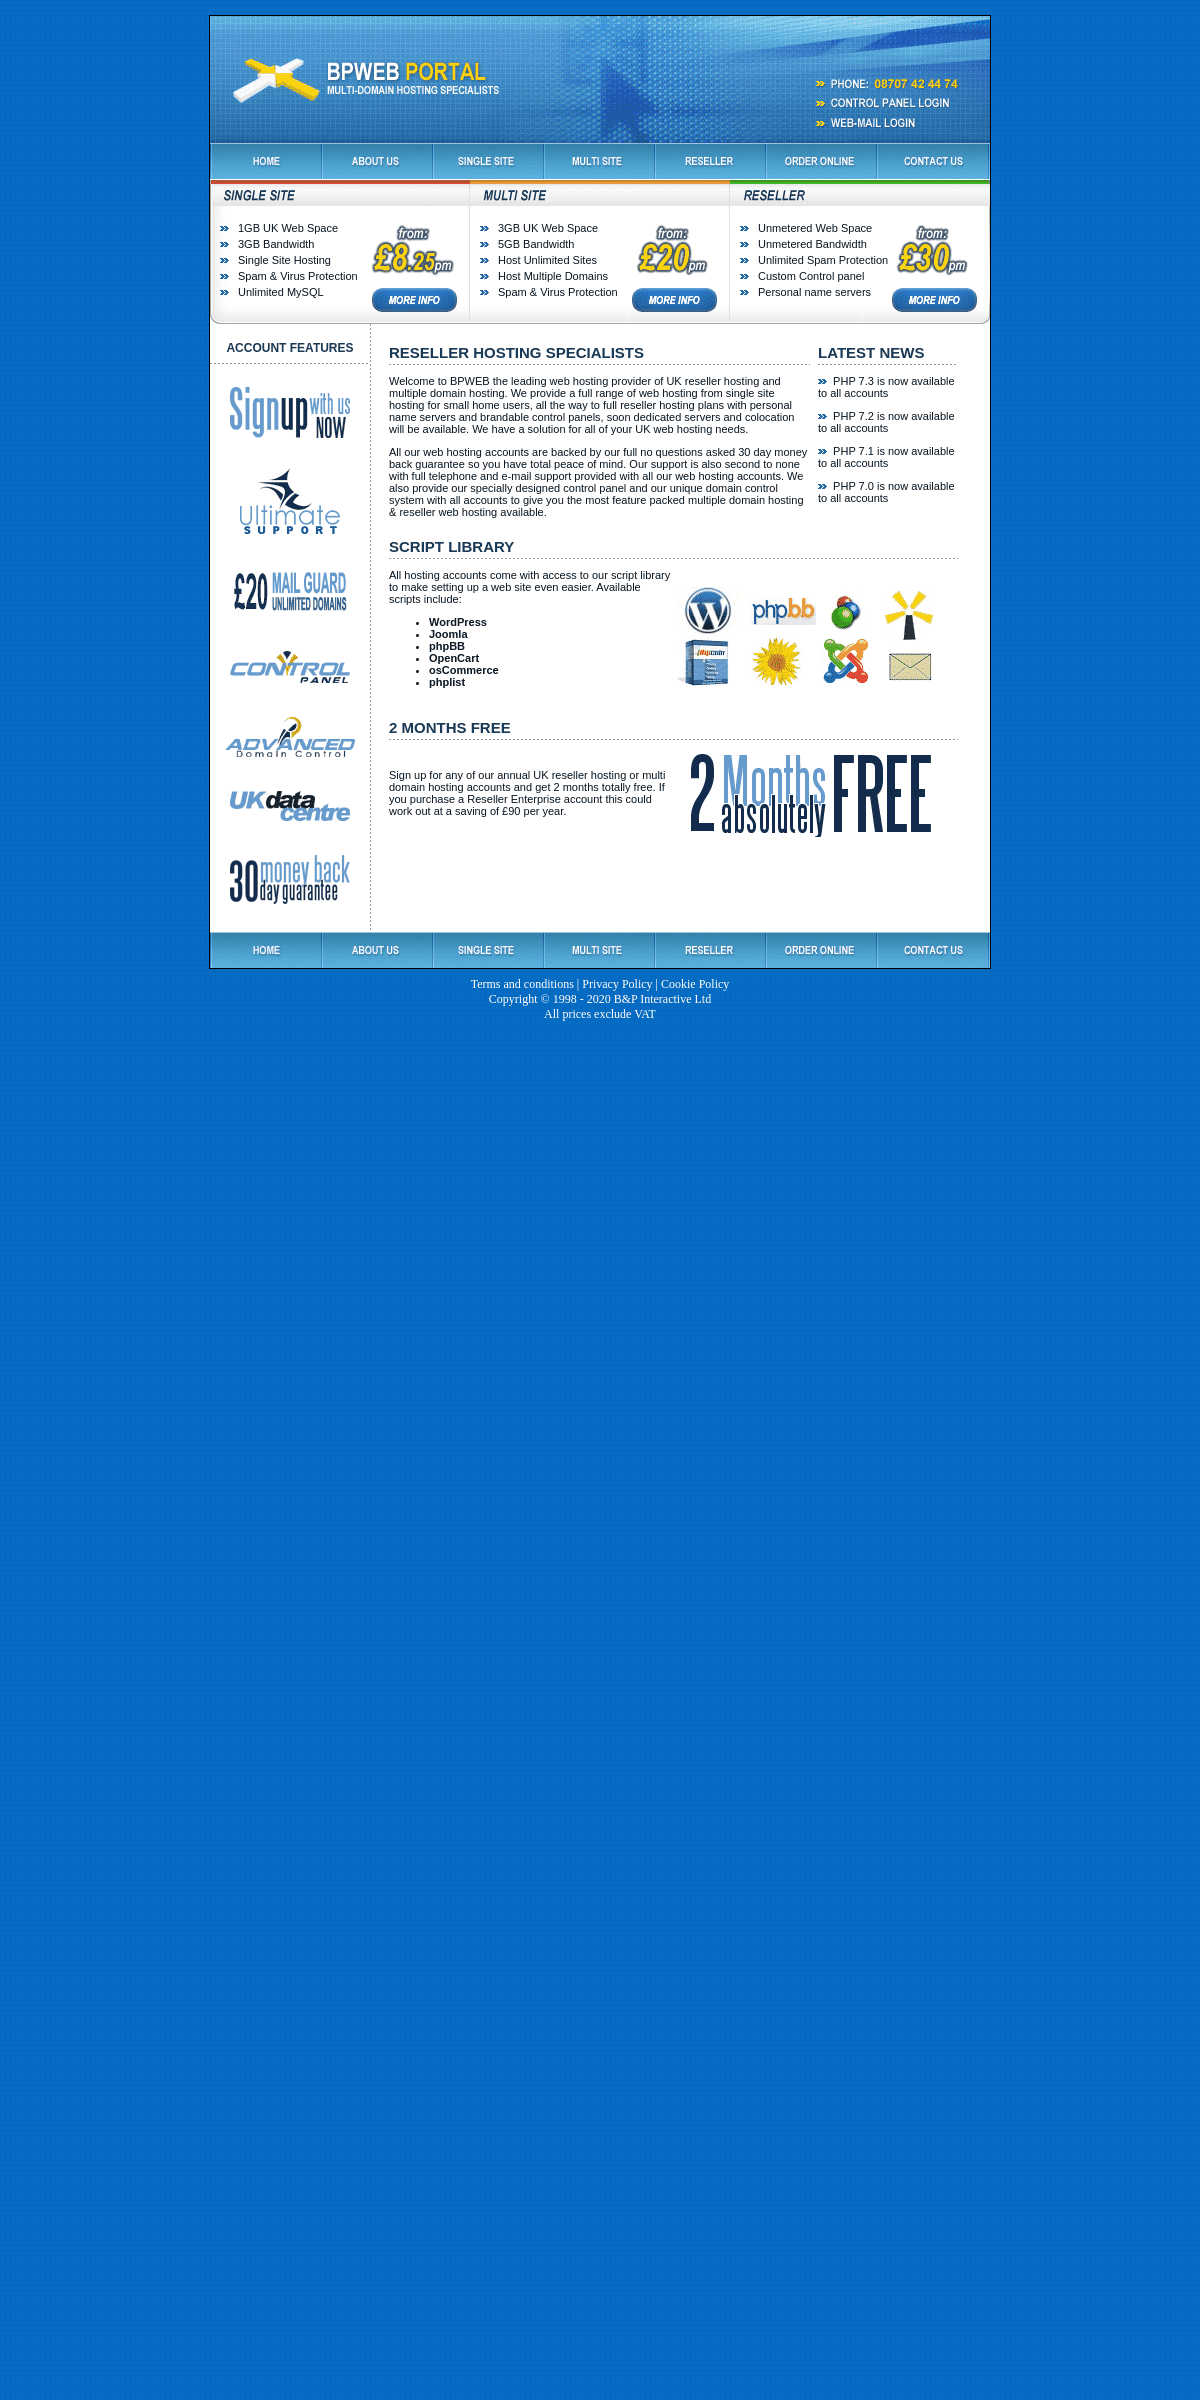 A complete backup of bpweb.net